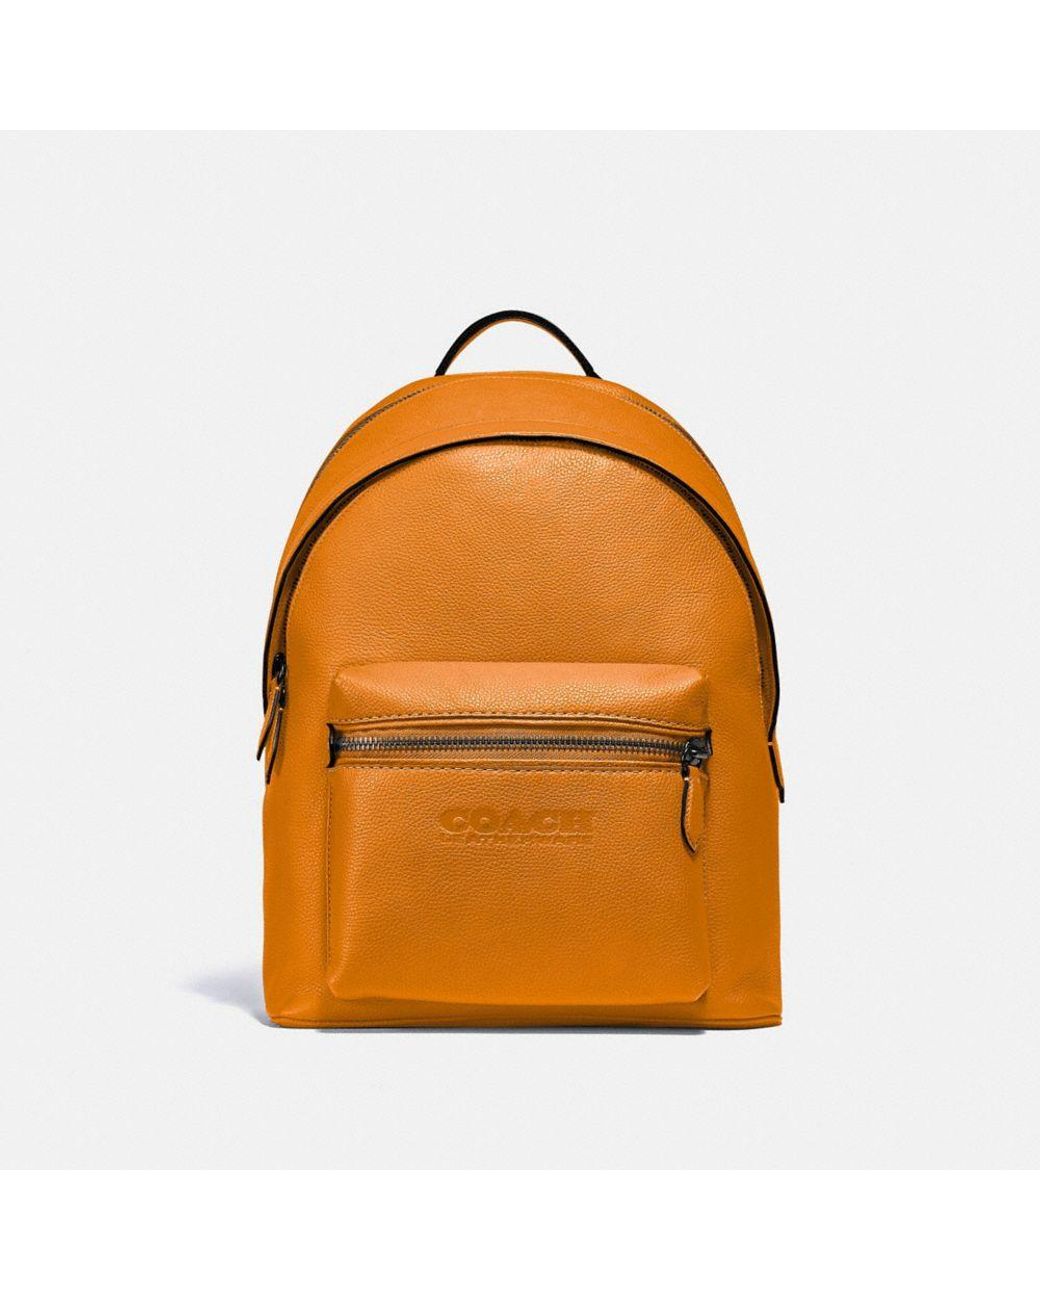 Introducir 73+ imagen coach orange backpack - Abzlocal.mx